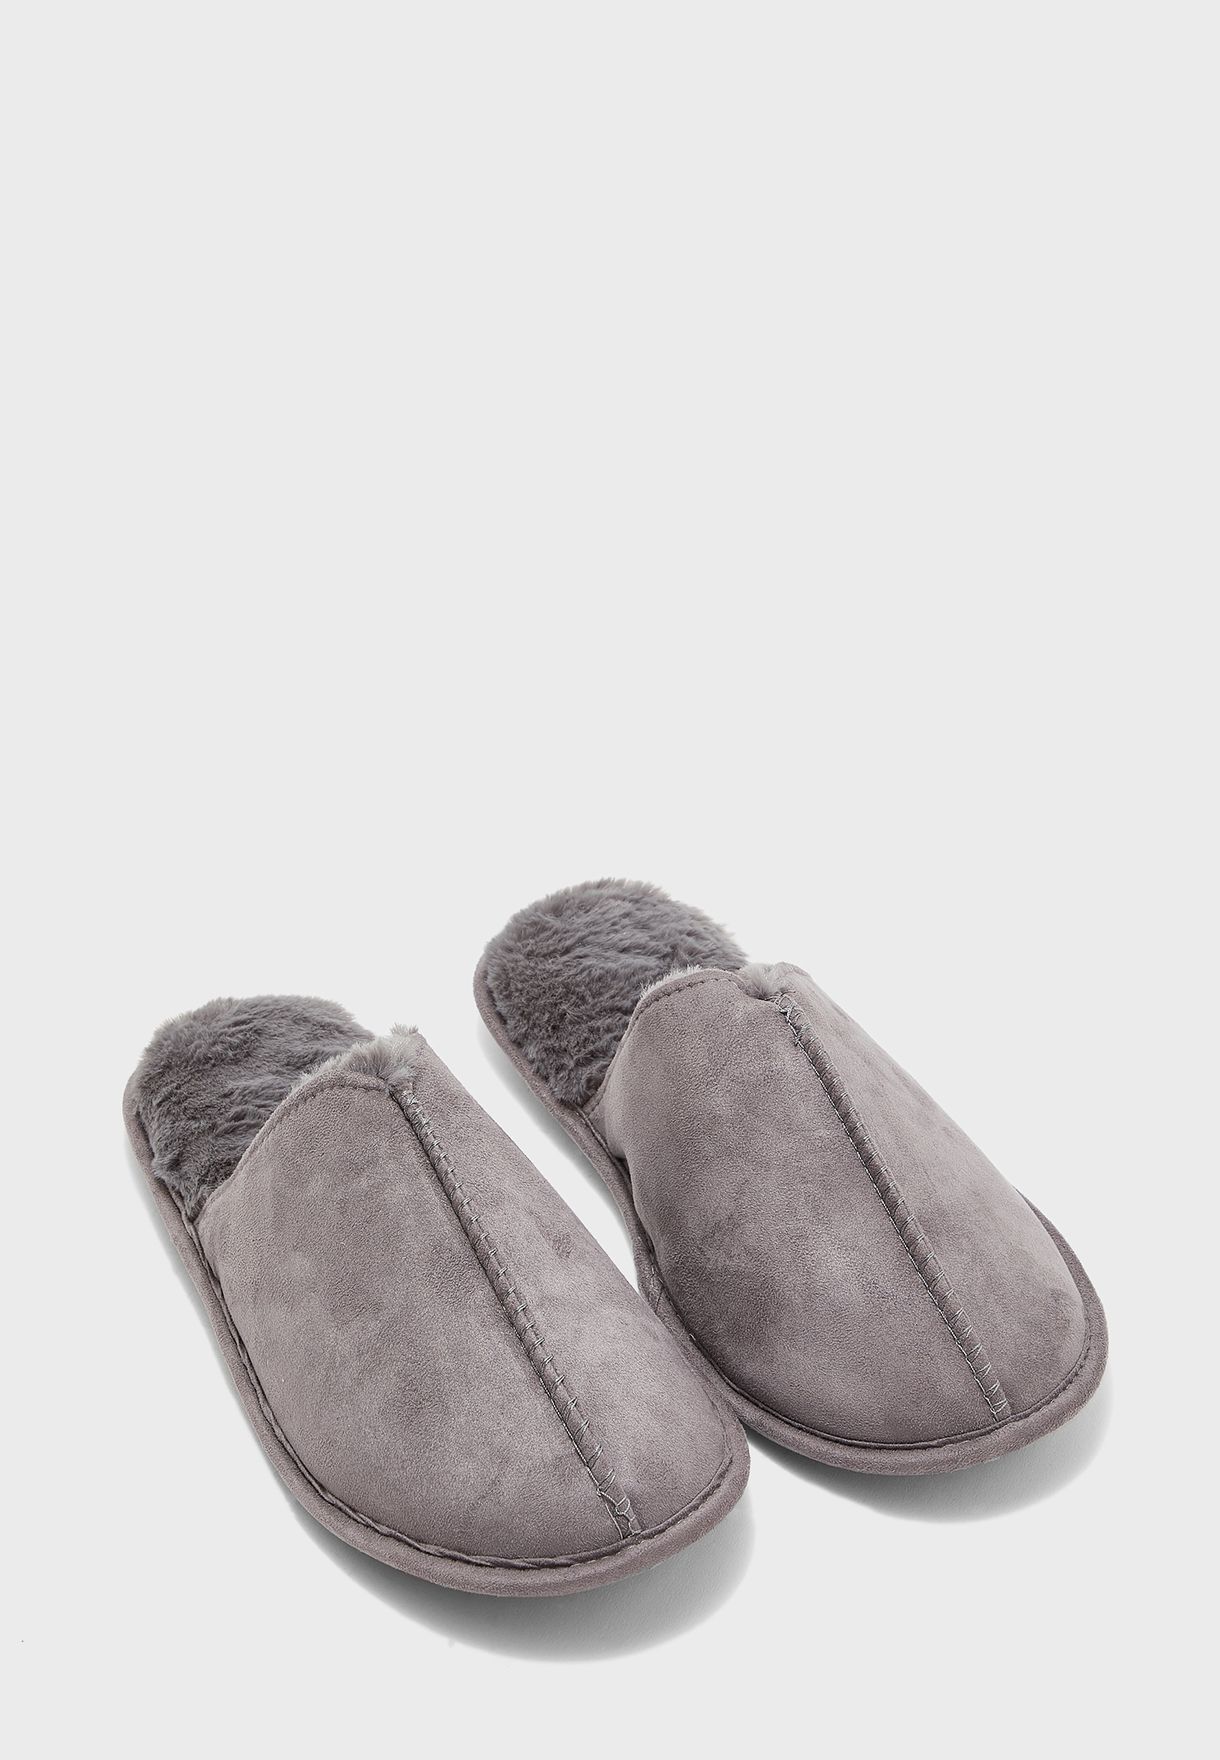 burtons mens slippers